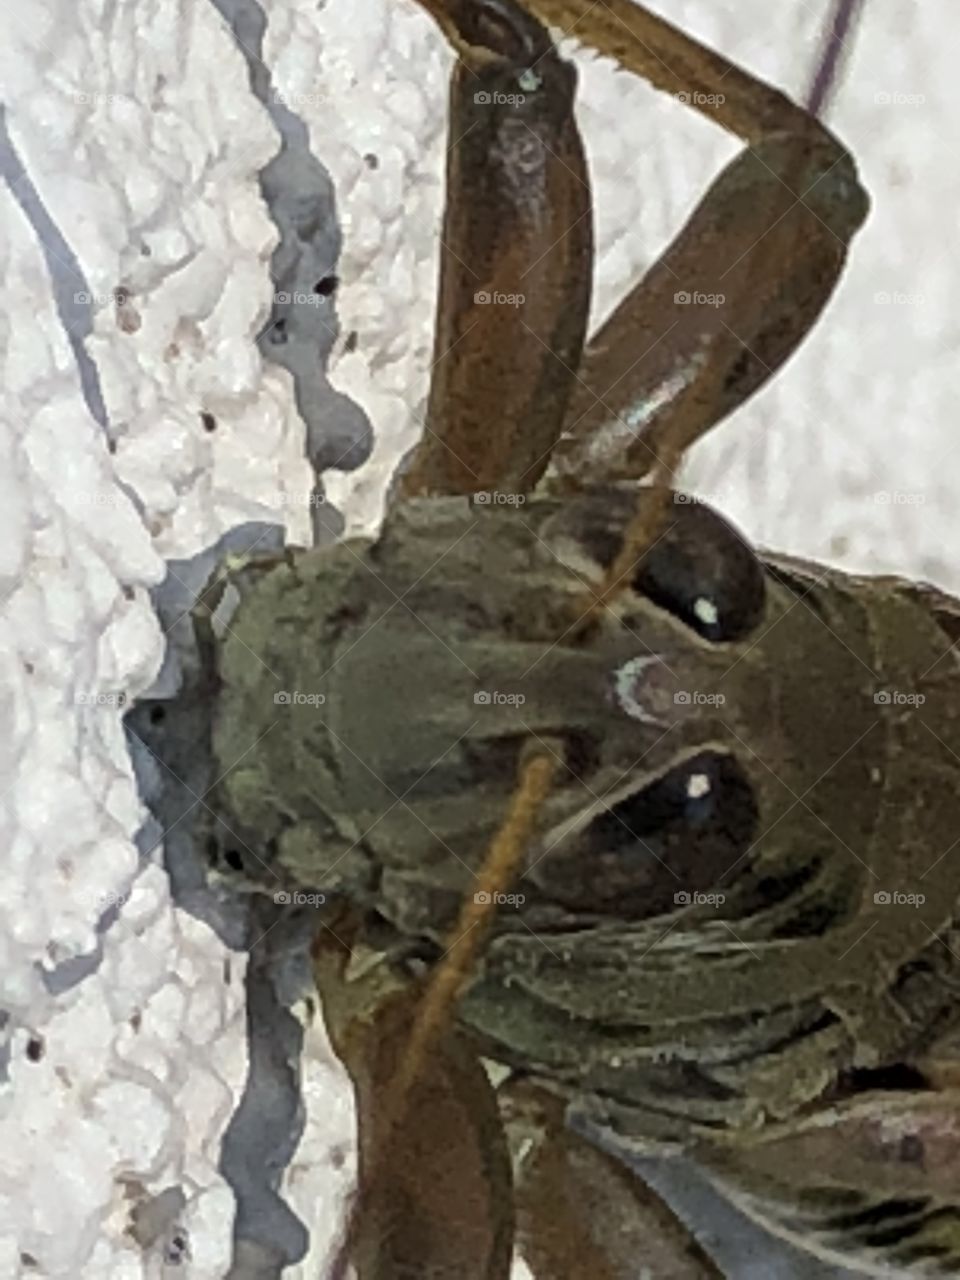 Grasshopper climbing on outside of home